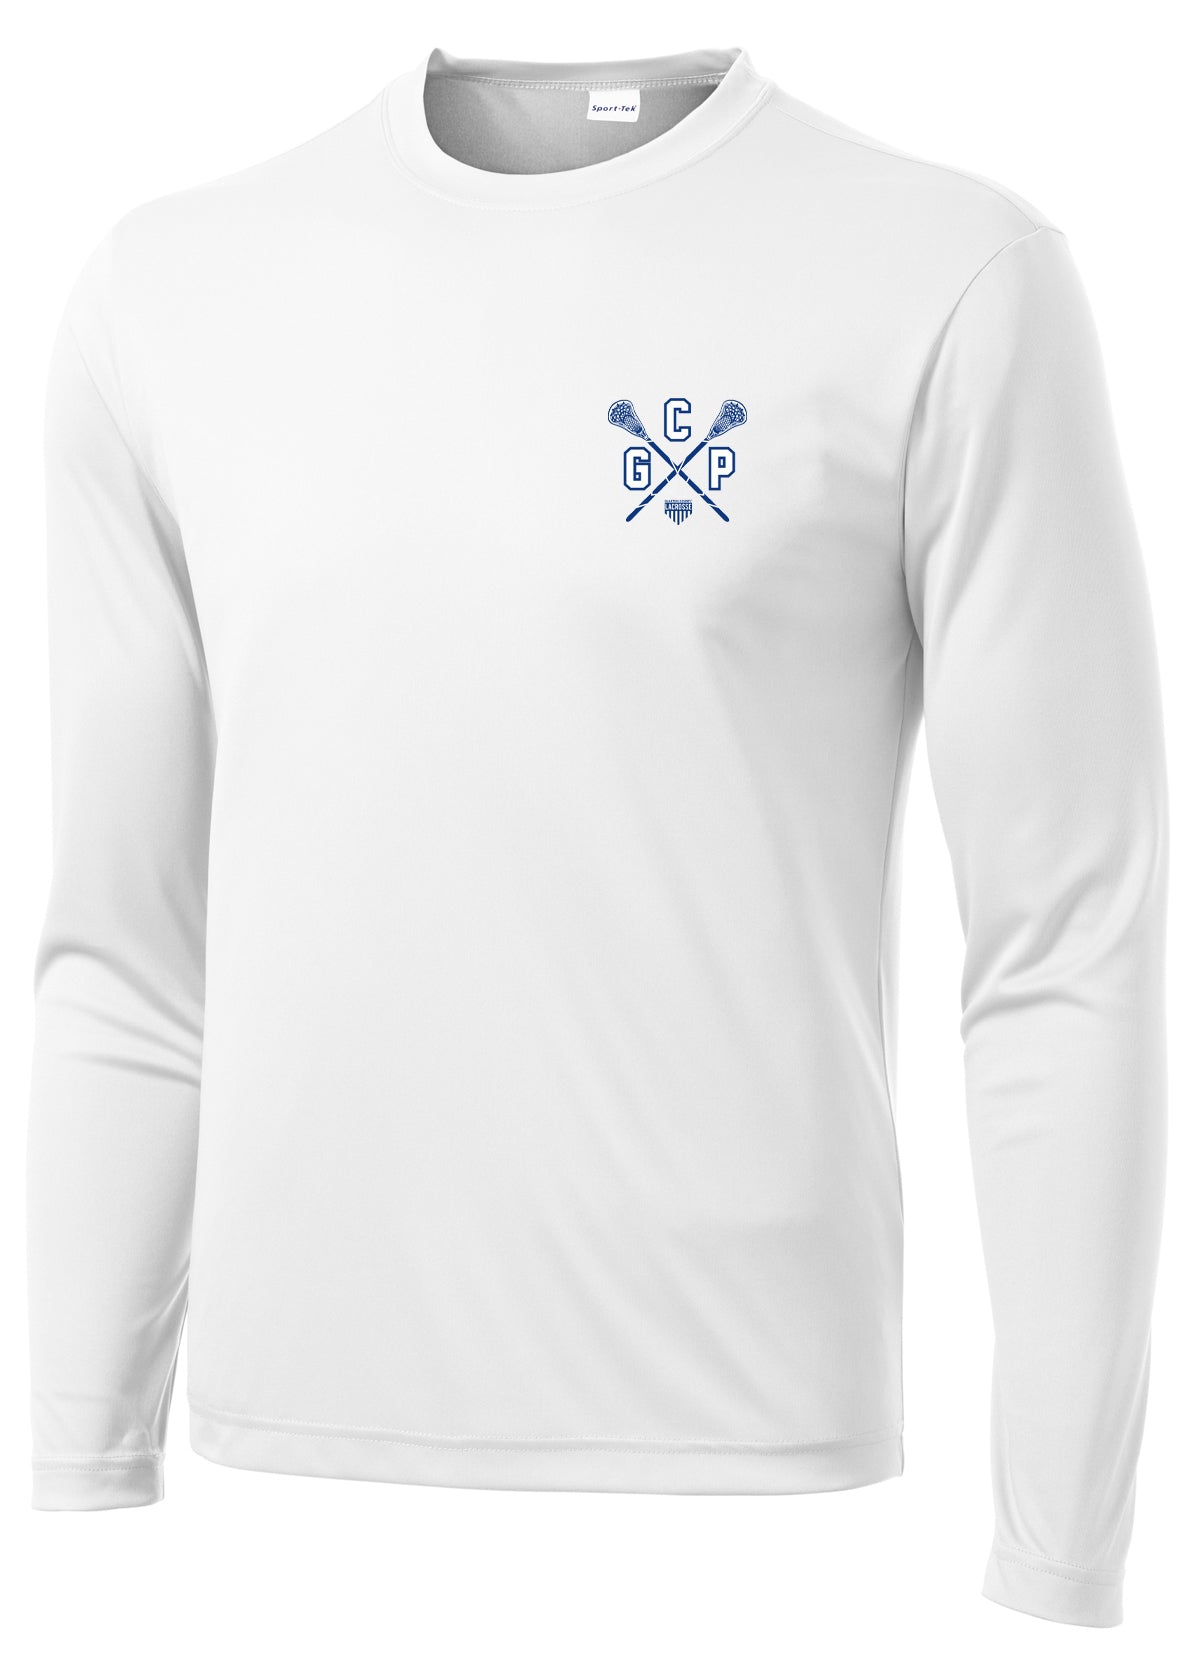 GCP Lacrosse White Long Sleeve Performance Shirt